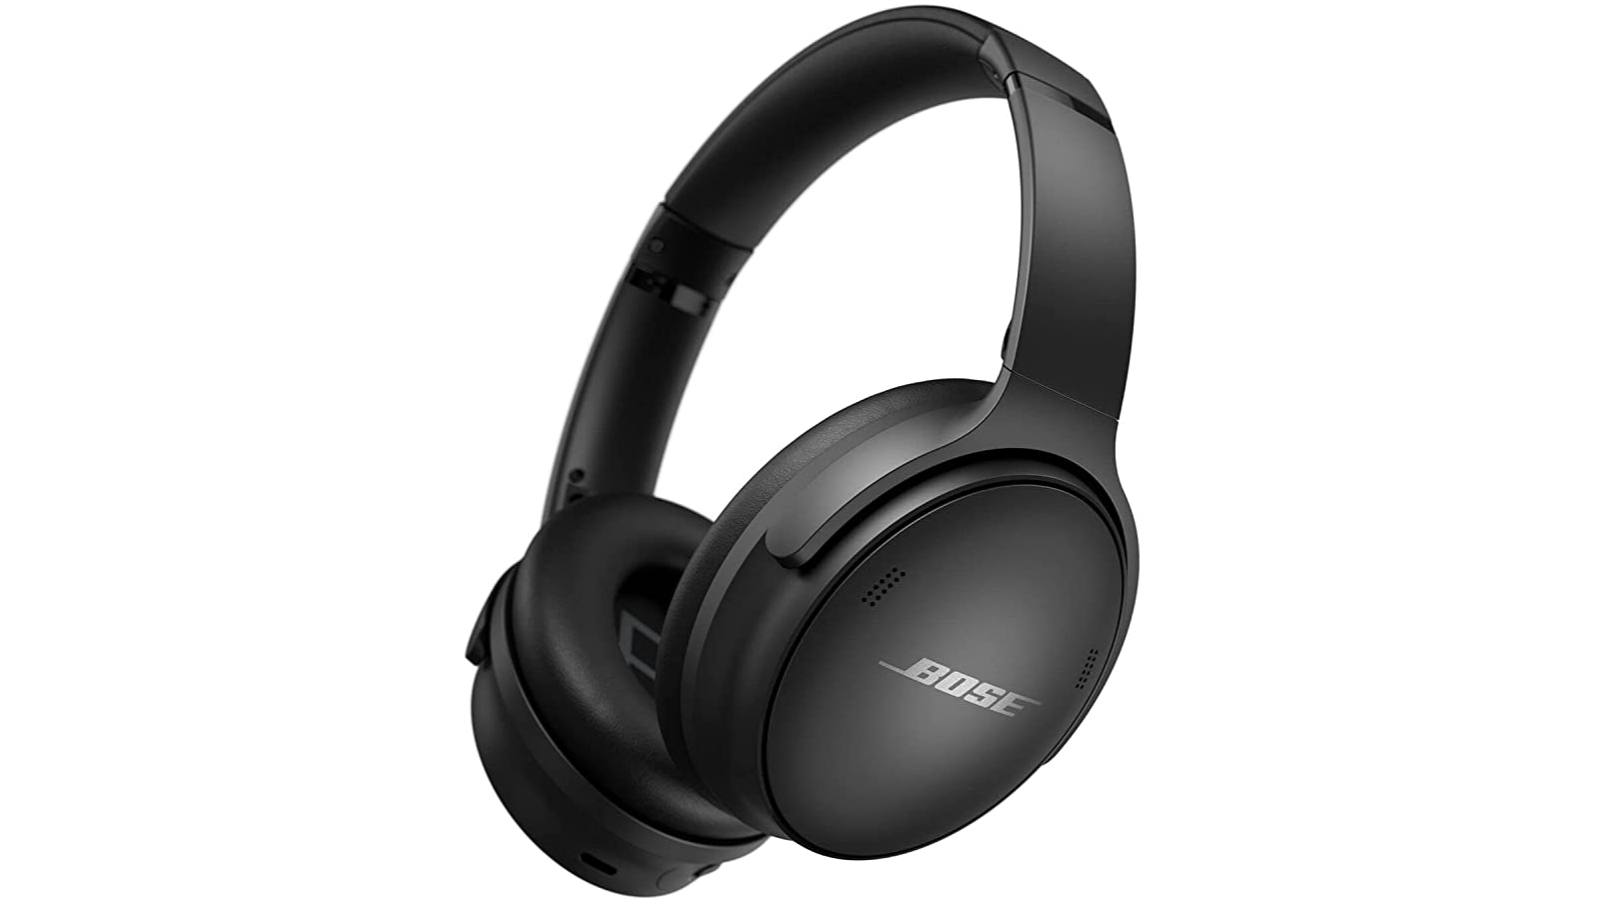 Bose QueitComfort SE headphones Black Friday deal